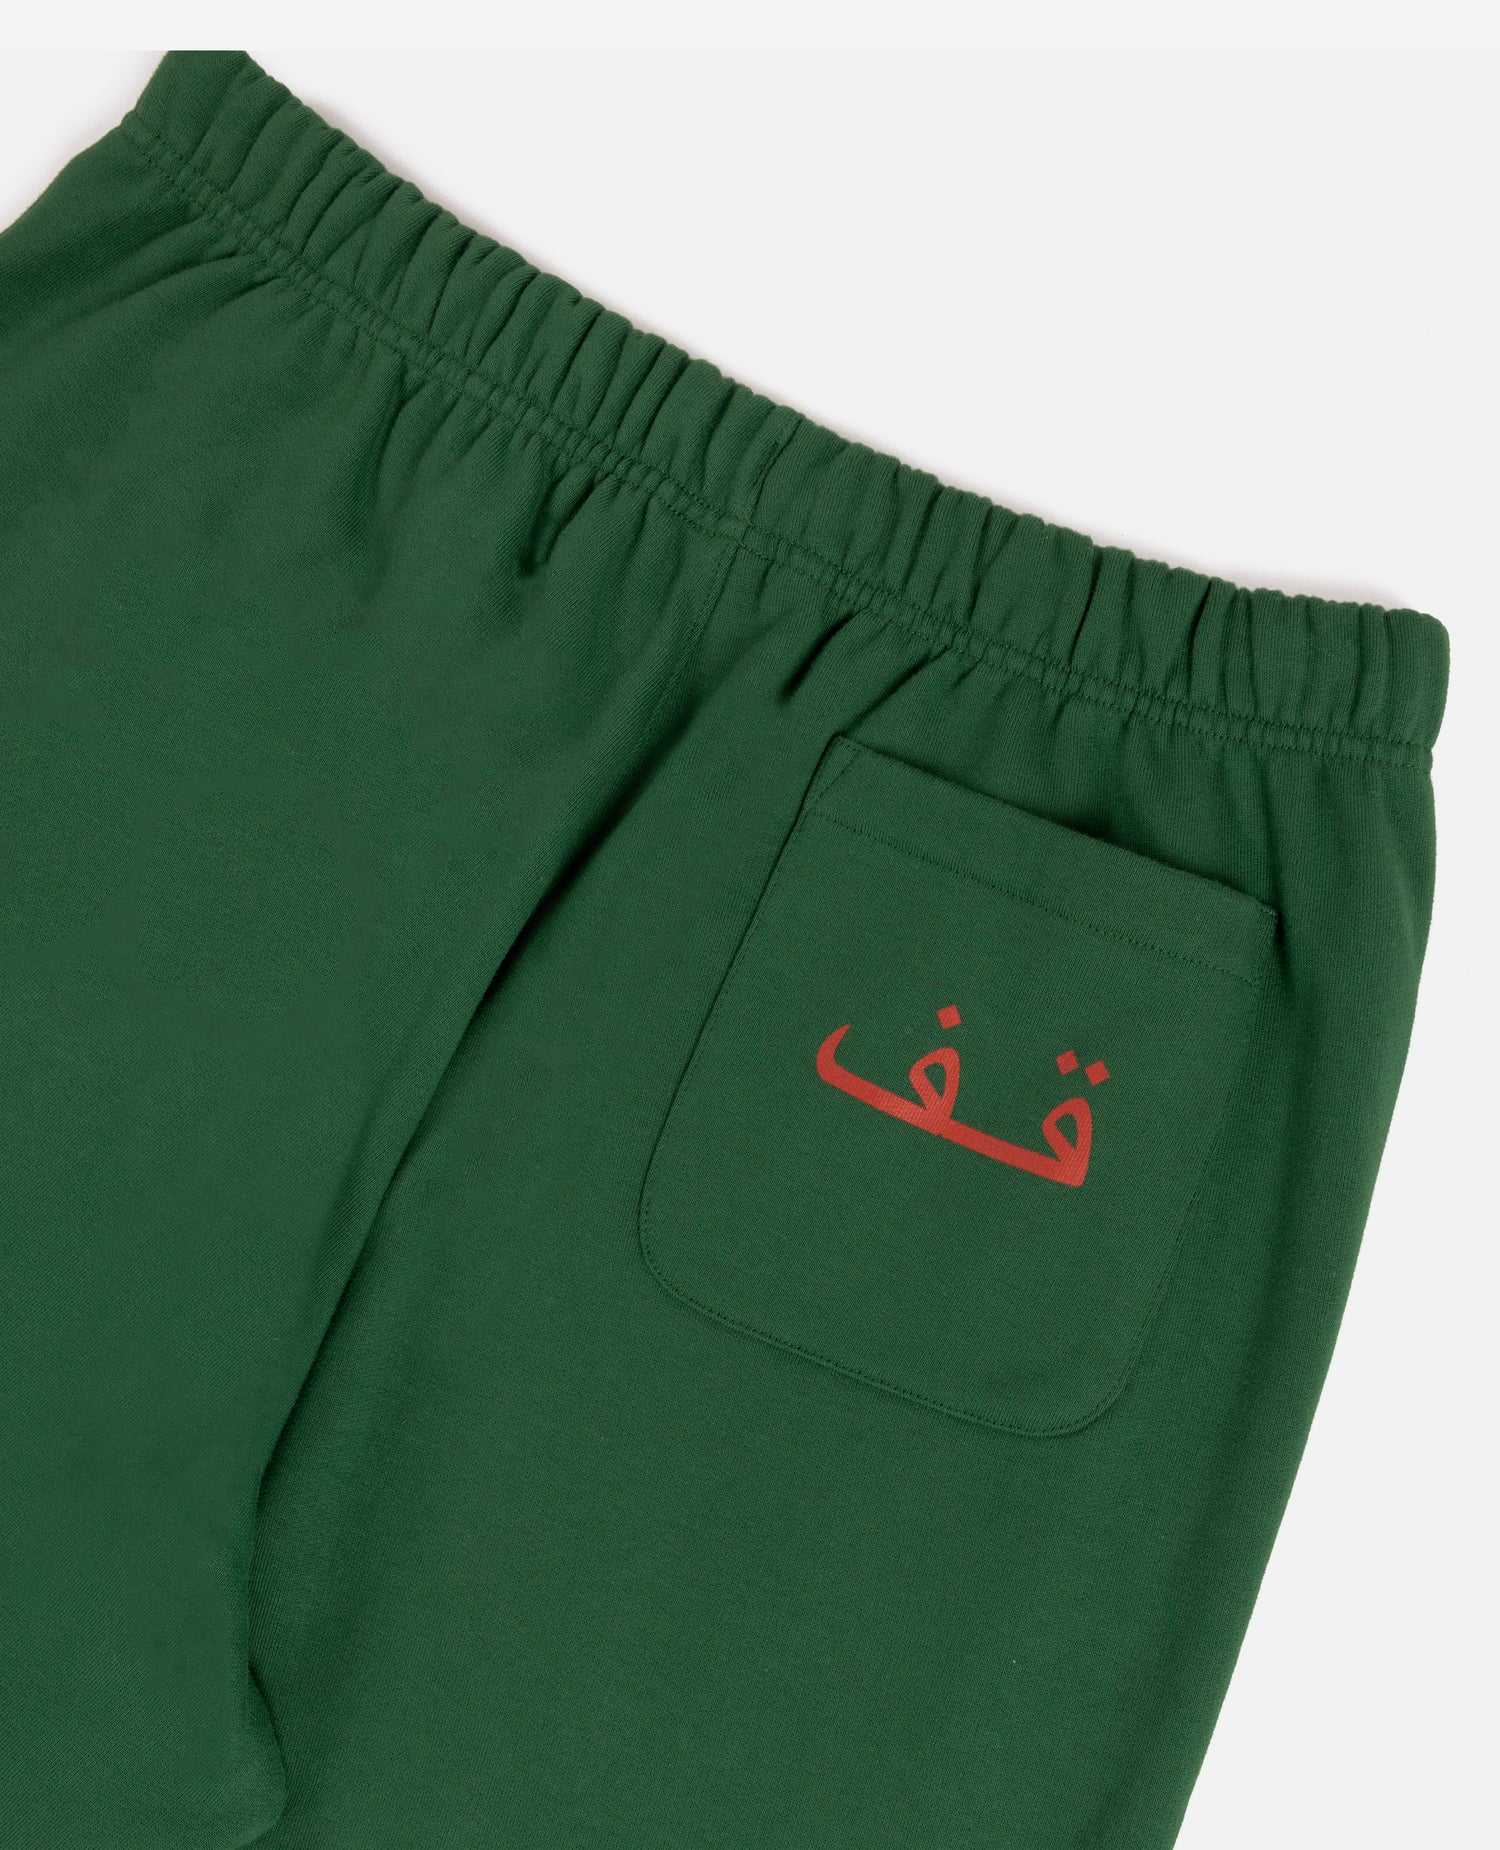 Pantaloni da jogging con logo Patta x Andy Wahloo (Hassan Hajjaj) (Eden)